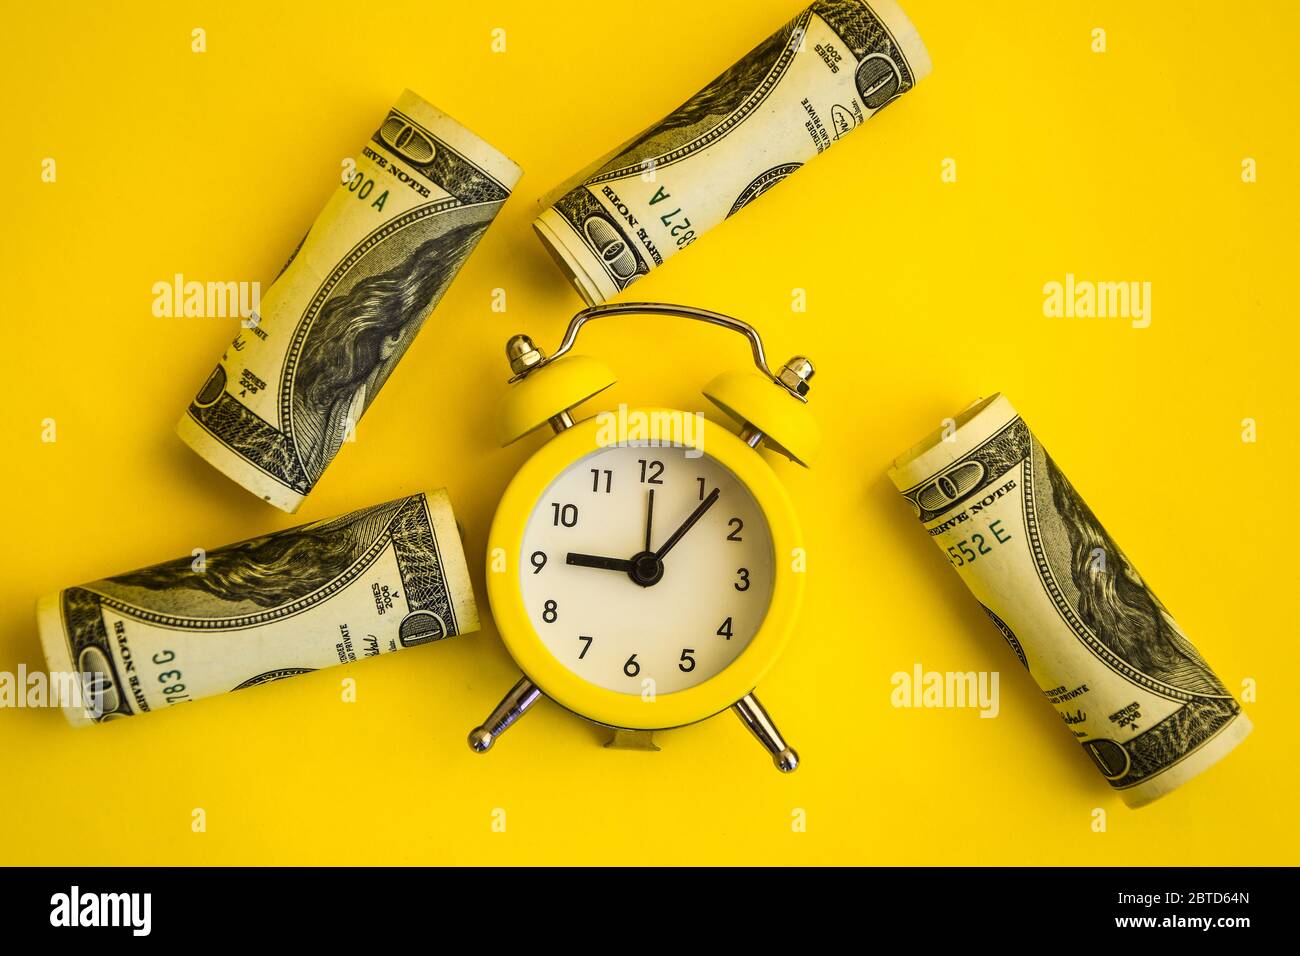 alarm clock both monetary denominations dollars, Time is money. Retro alarm clock and hundred dollar bills on a yellow background Stock Photo